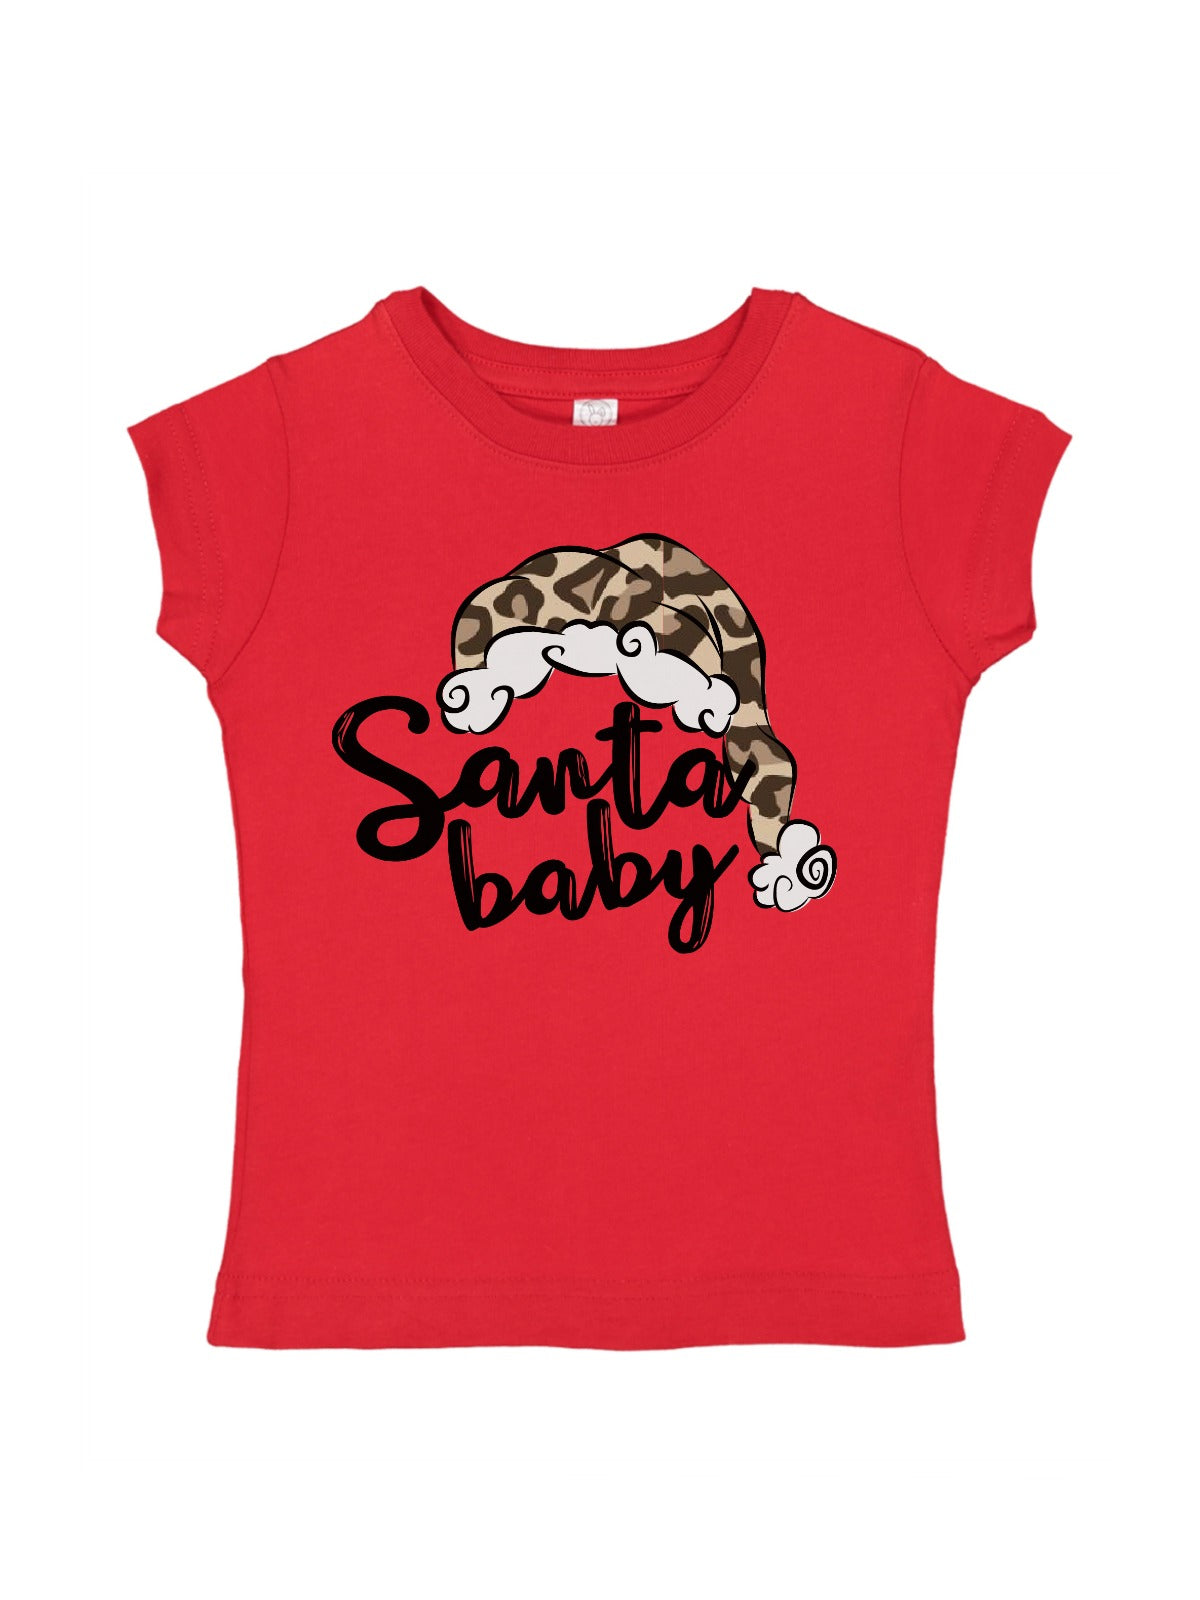 Santa Baby Leopard Girl's Top